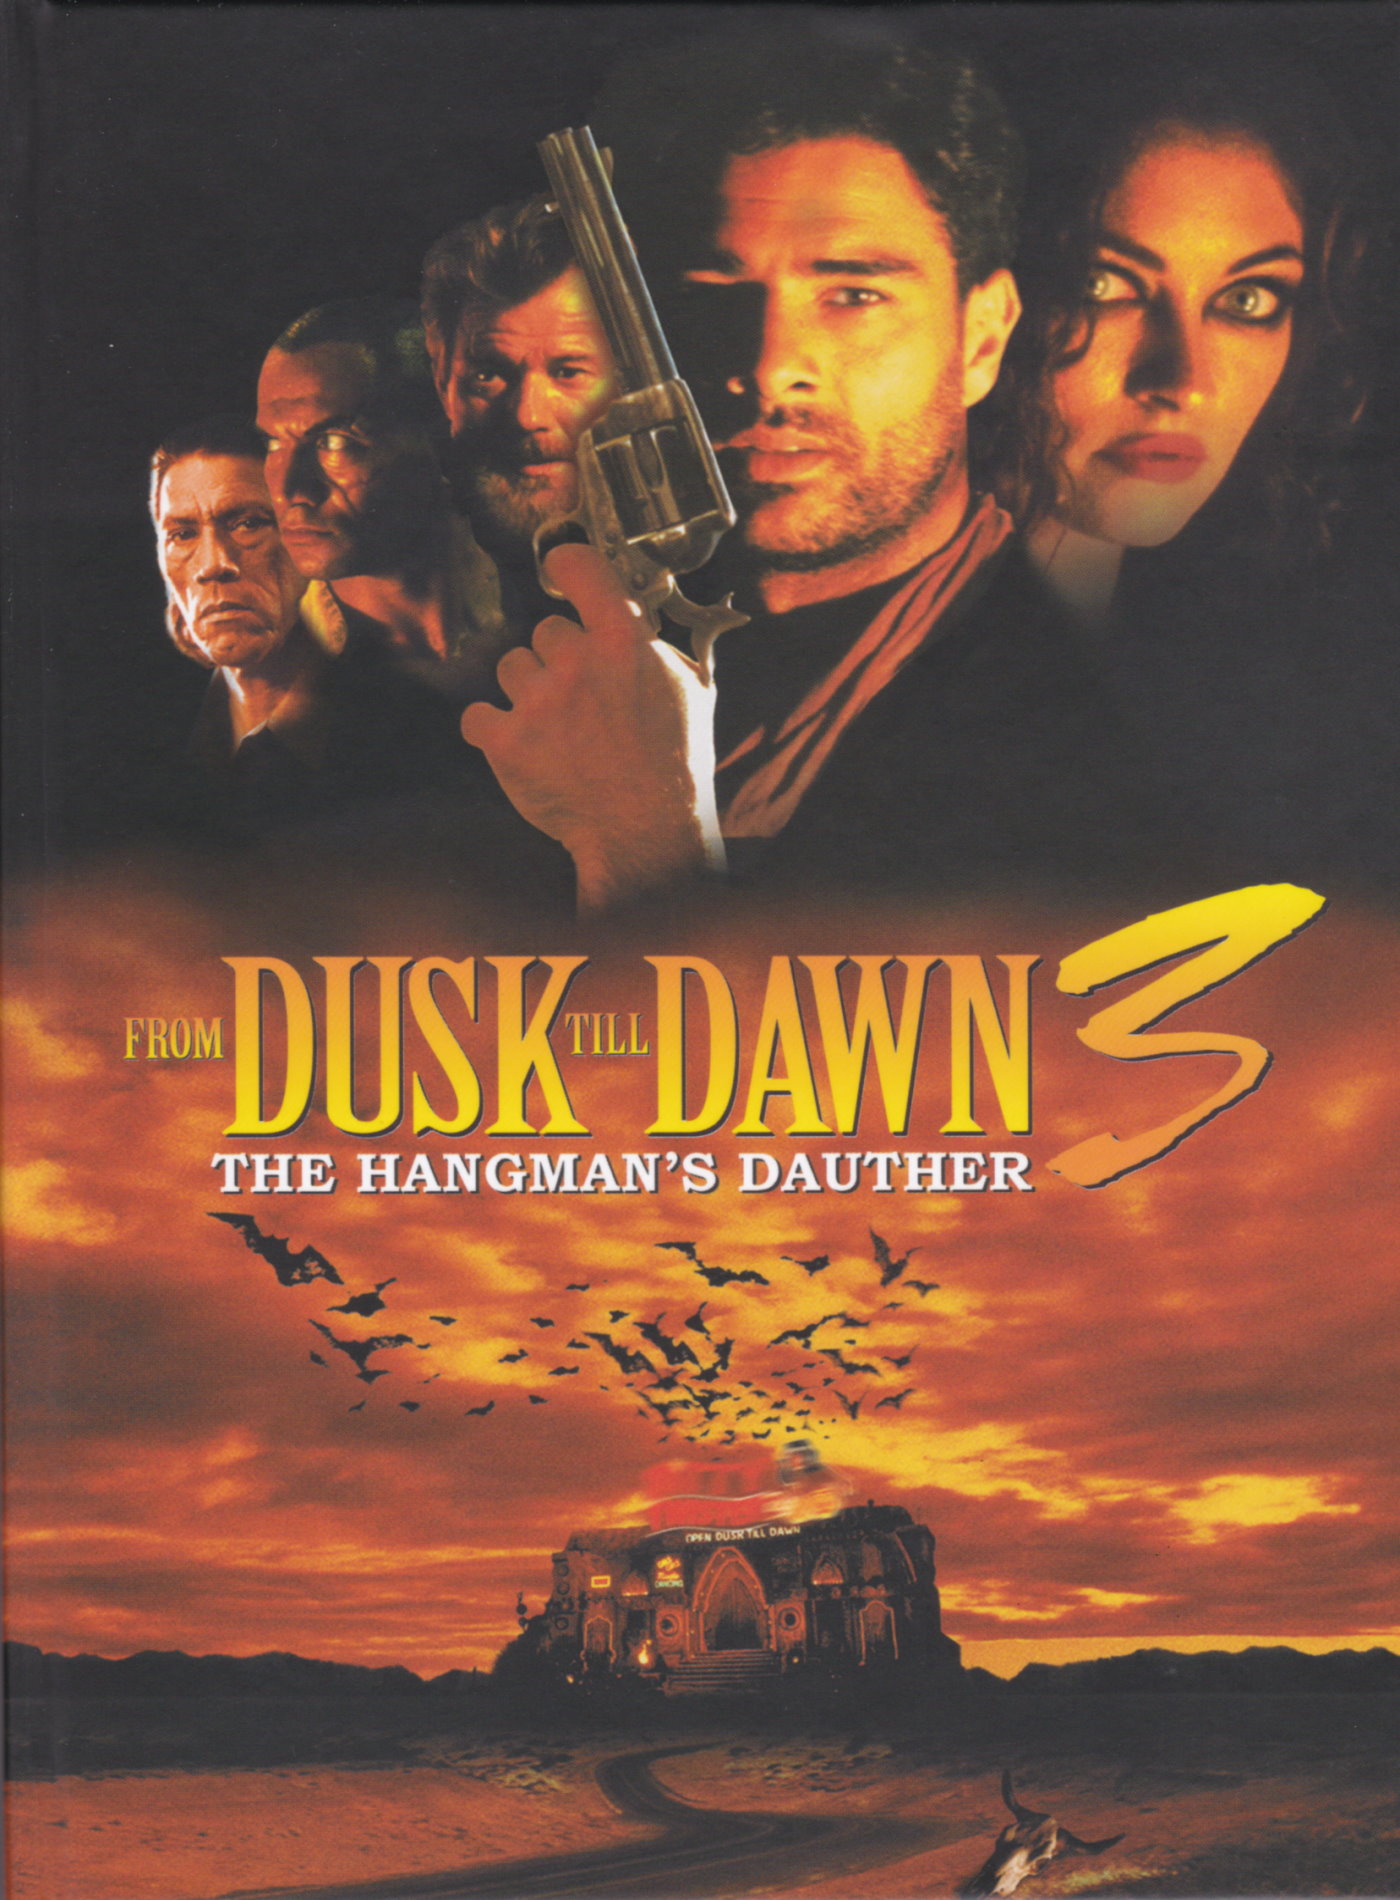 Cover - From Dusk Till Dawn 3 -The Hangman's Daughter.jpg